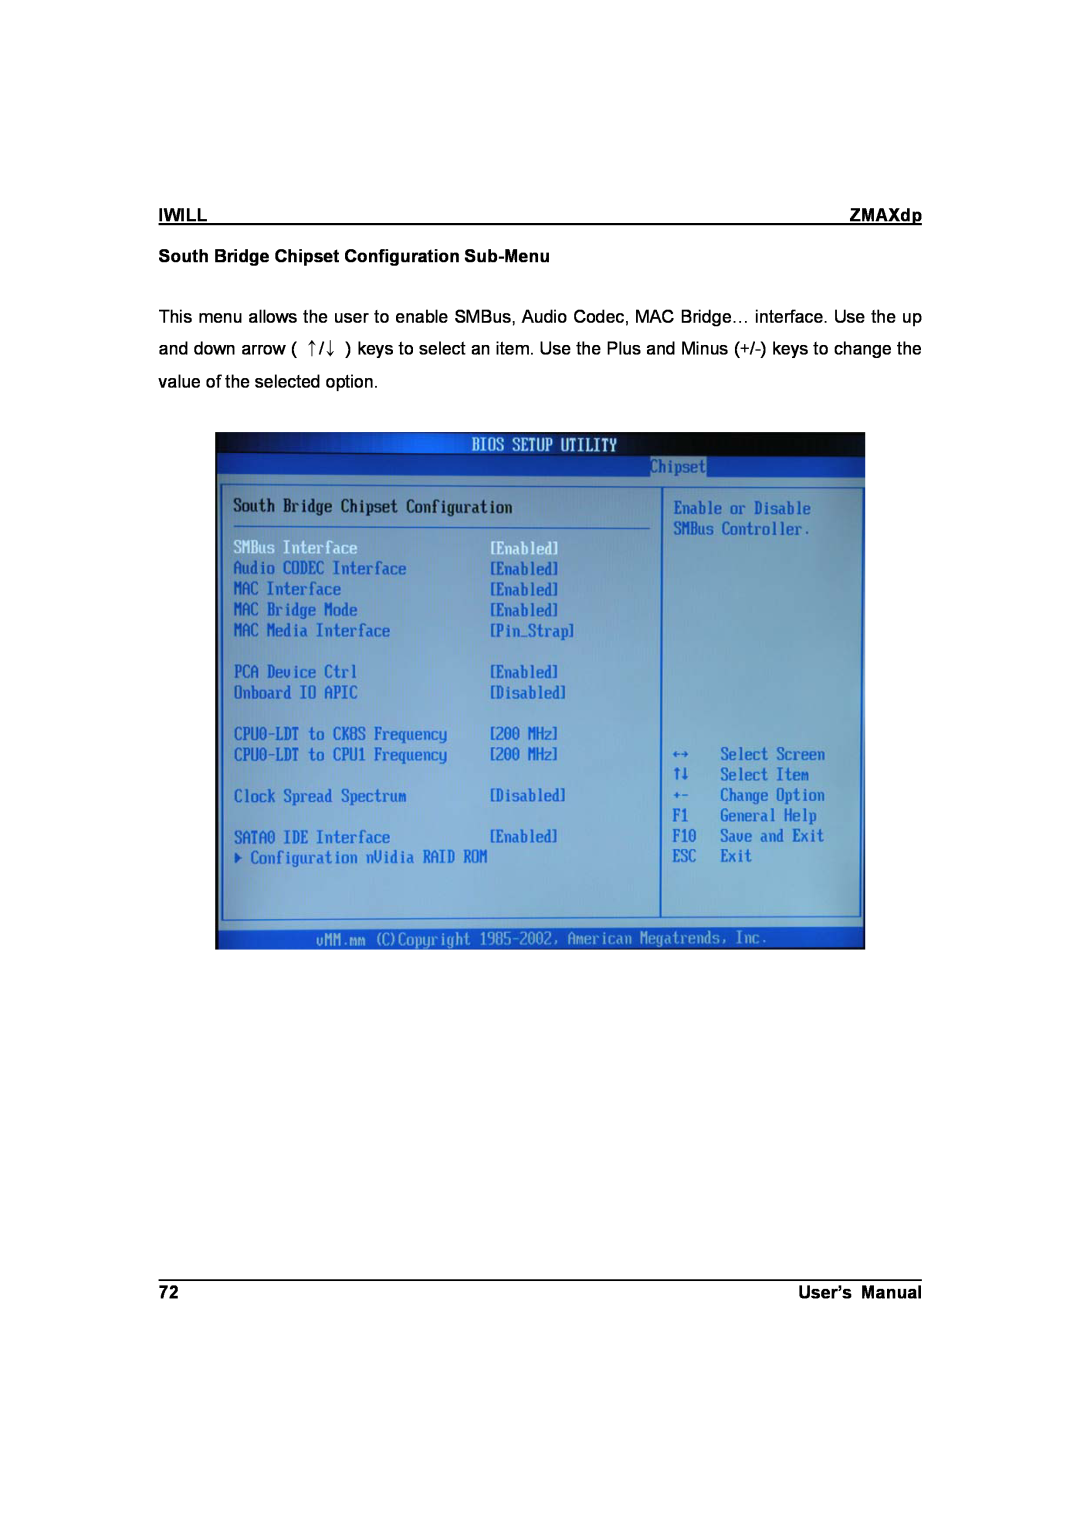 IBM ZMAXdp user manual Iwill, South Bridge Chipset Configuration Sub-Menu, User’s Manual 